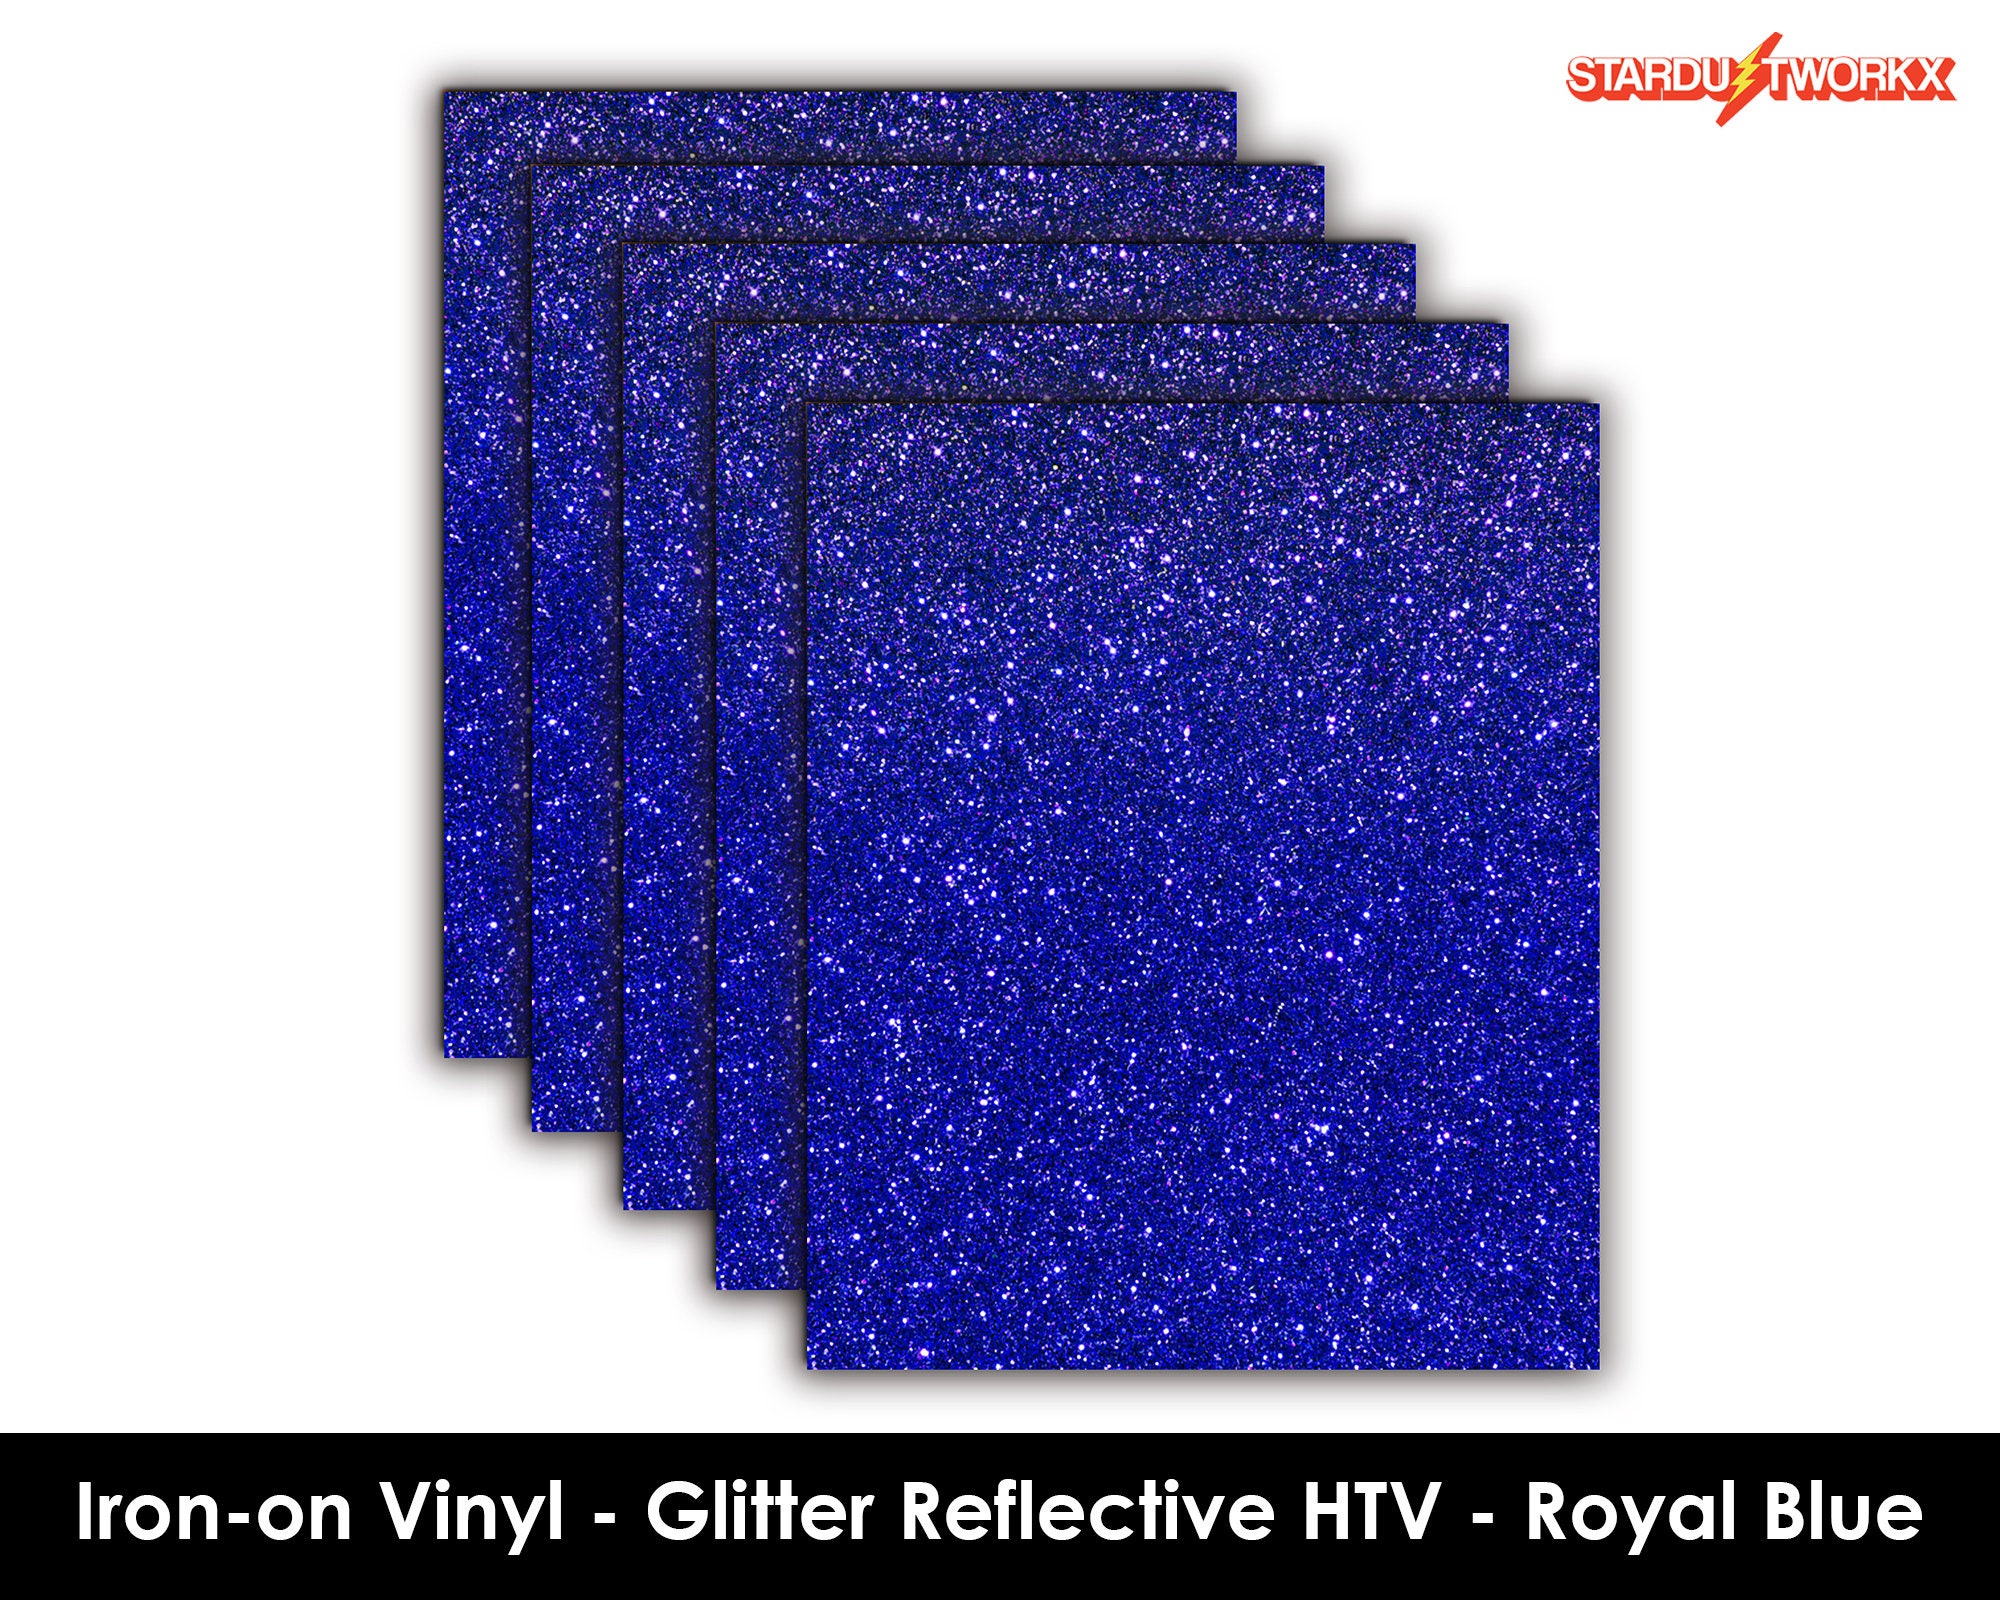 Stardustworkx Glitter Reflective HTV Royal Blue 10 X 12 Heat Transfer Vinyl  for T-shirts Iron on Vinyl Bundle Sheets Cricut Silhouette 